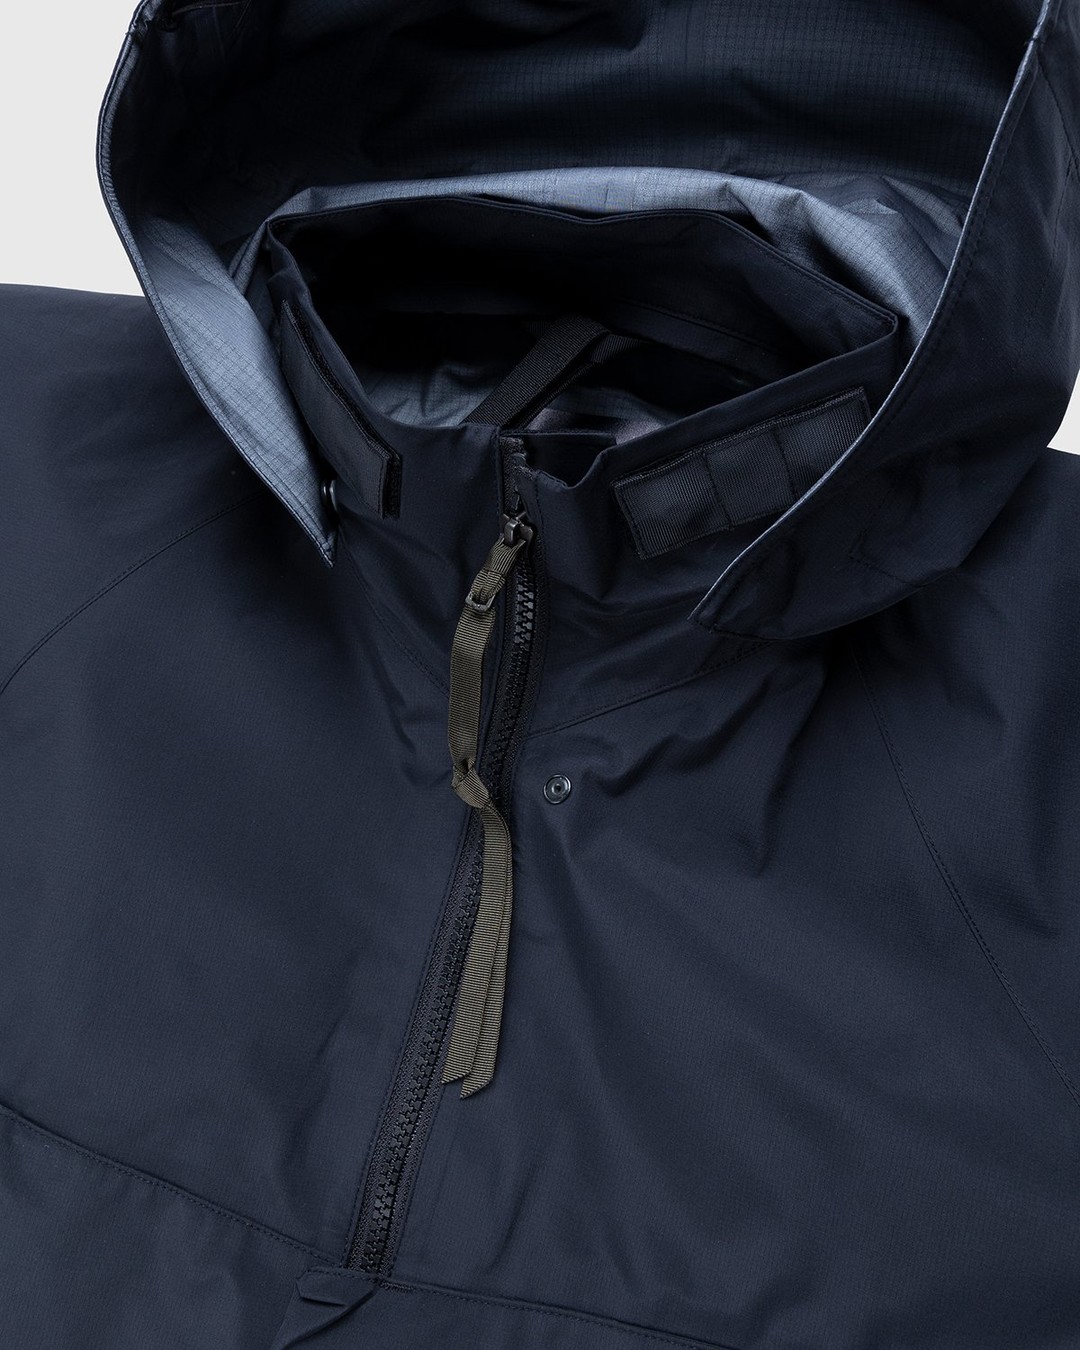 ACRONYM – J96-GT Jacket Black Highsnobiety Shop